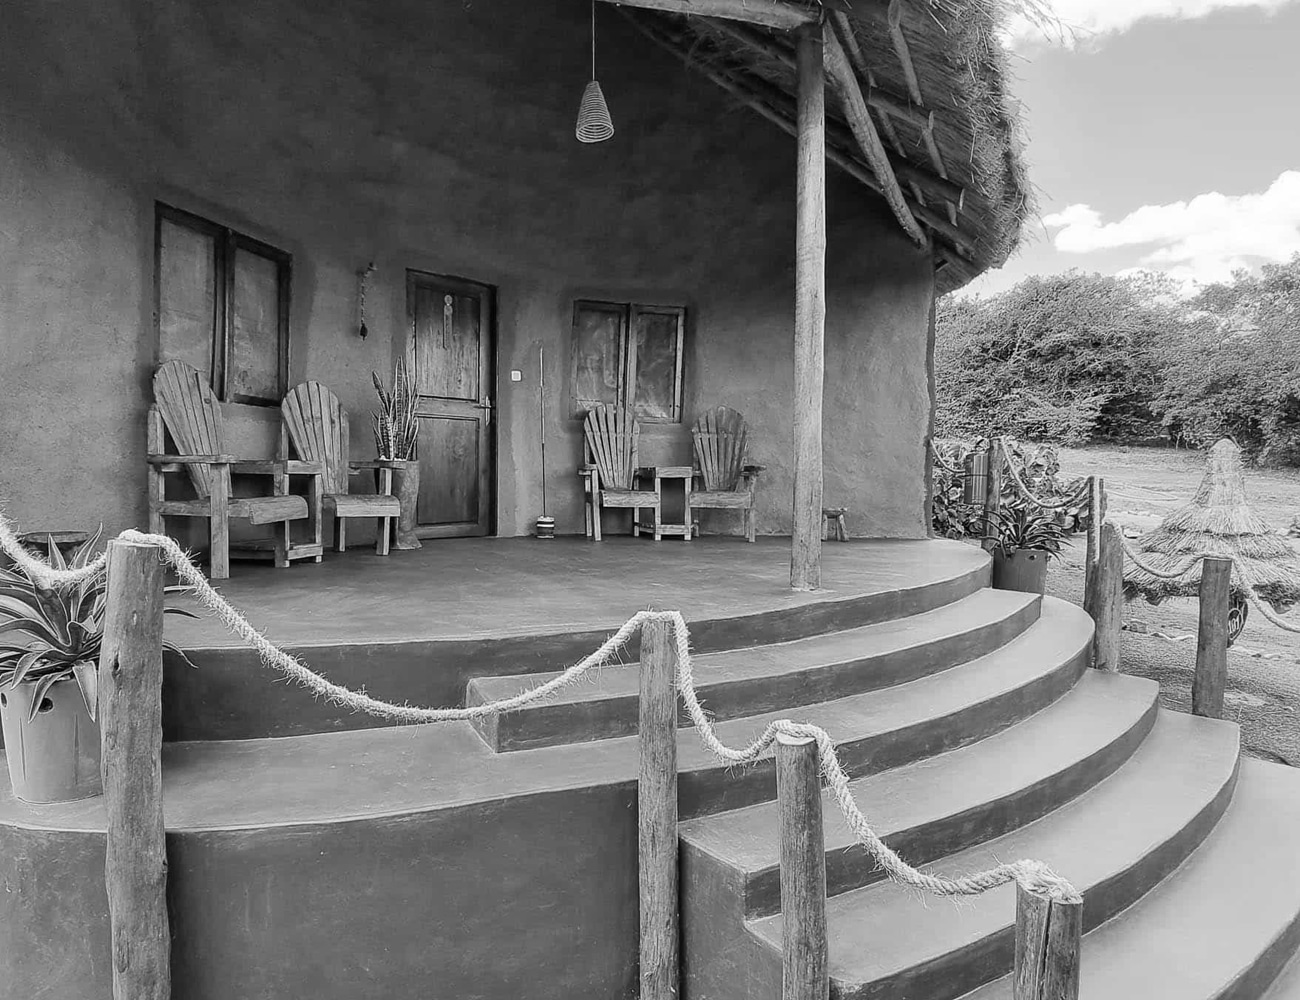 Houses in Maasai boma Village